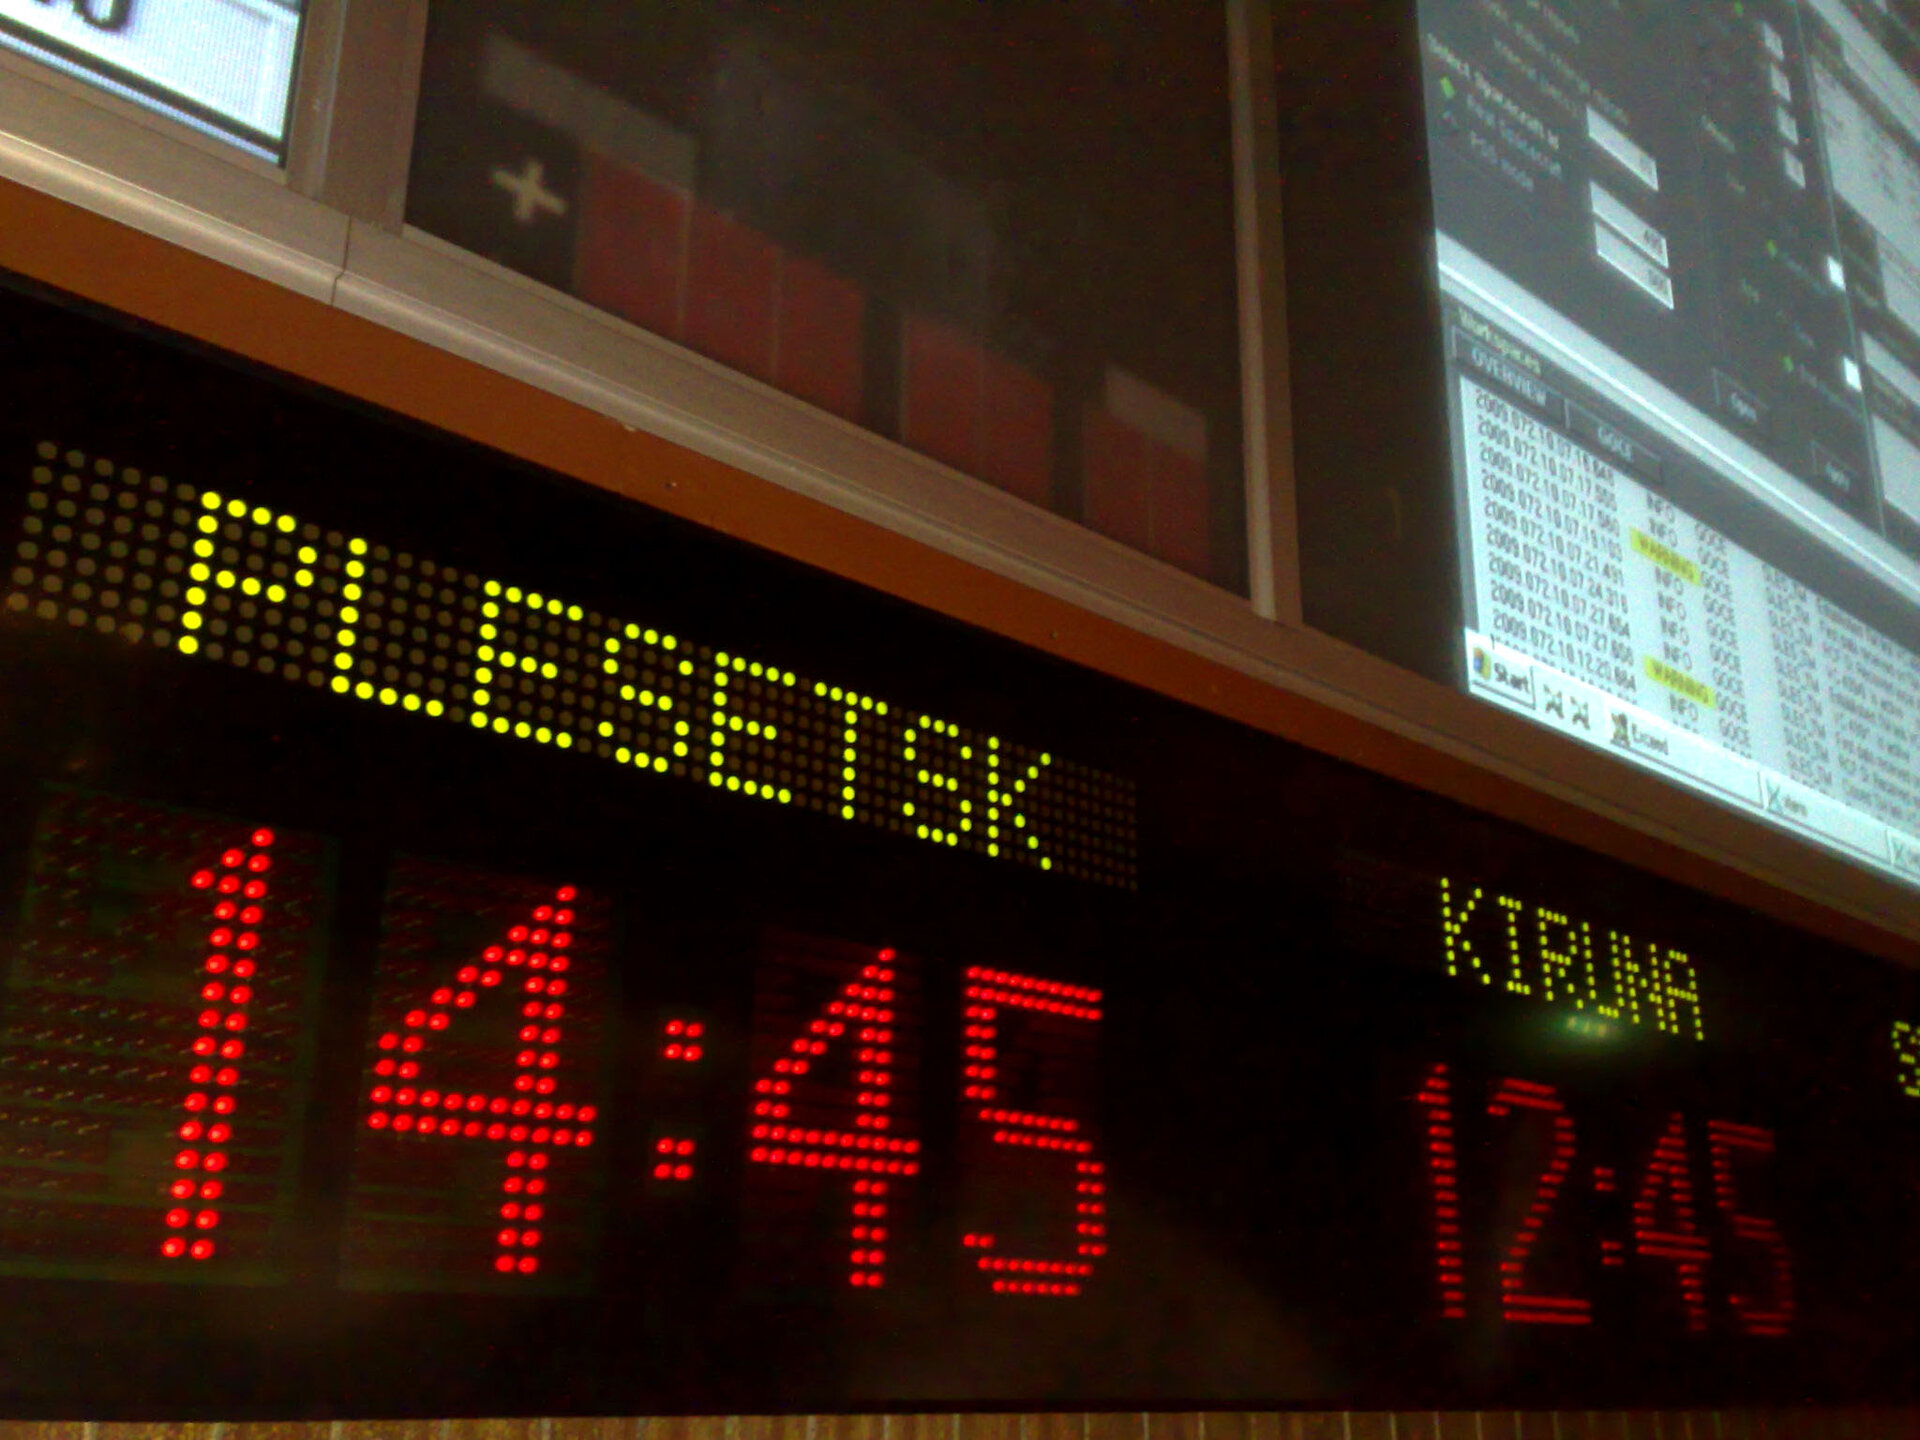 Plesetsk time display - CET + 2 hours